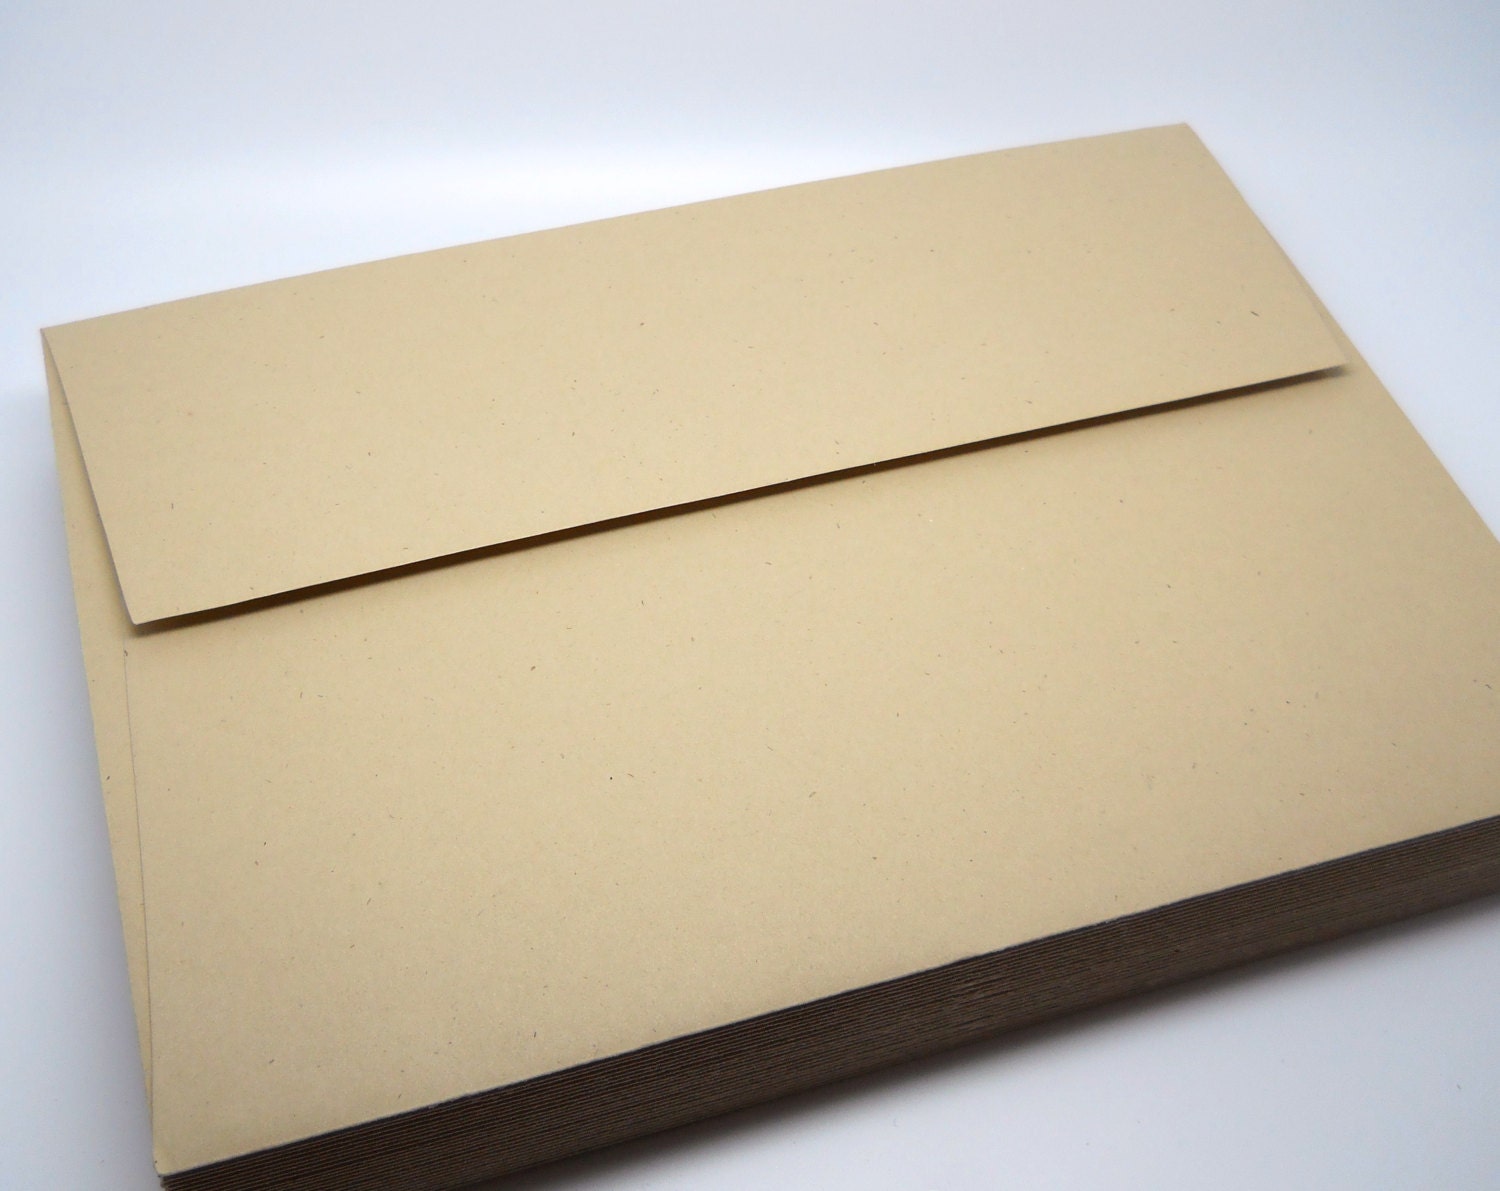 5x7 Envelopes Deals On 1001 Blocks